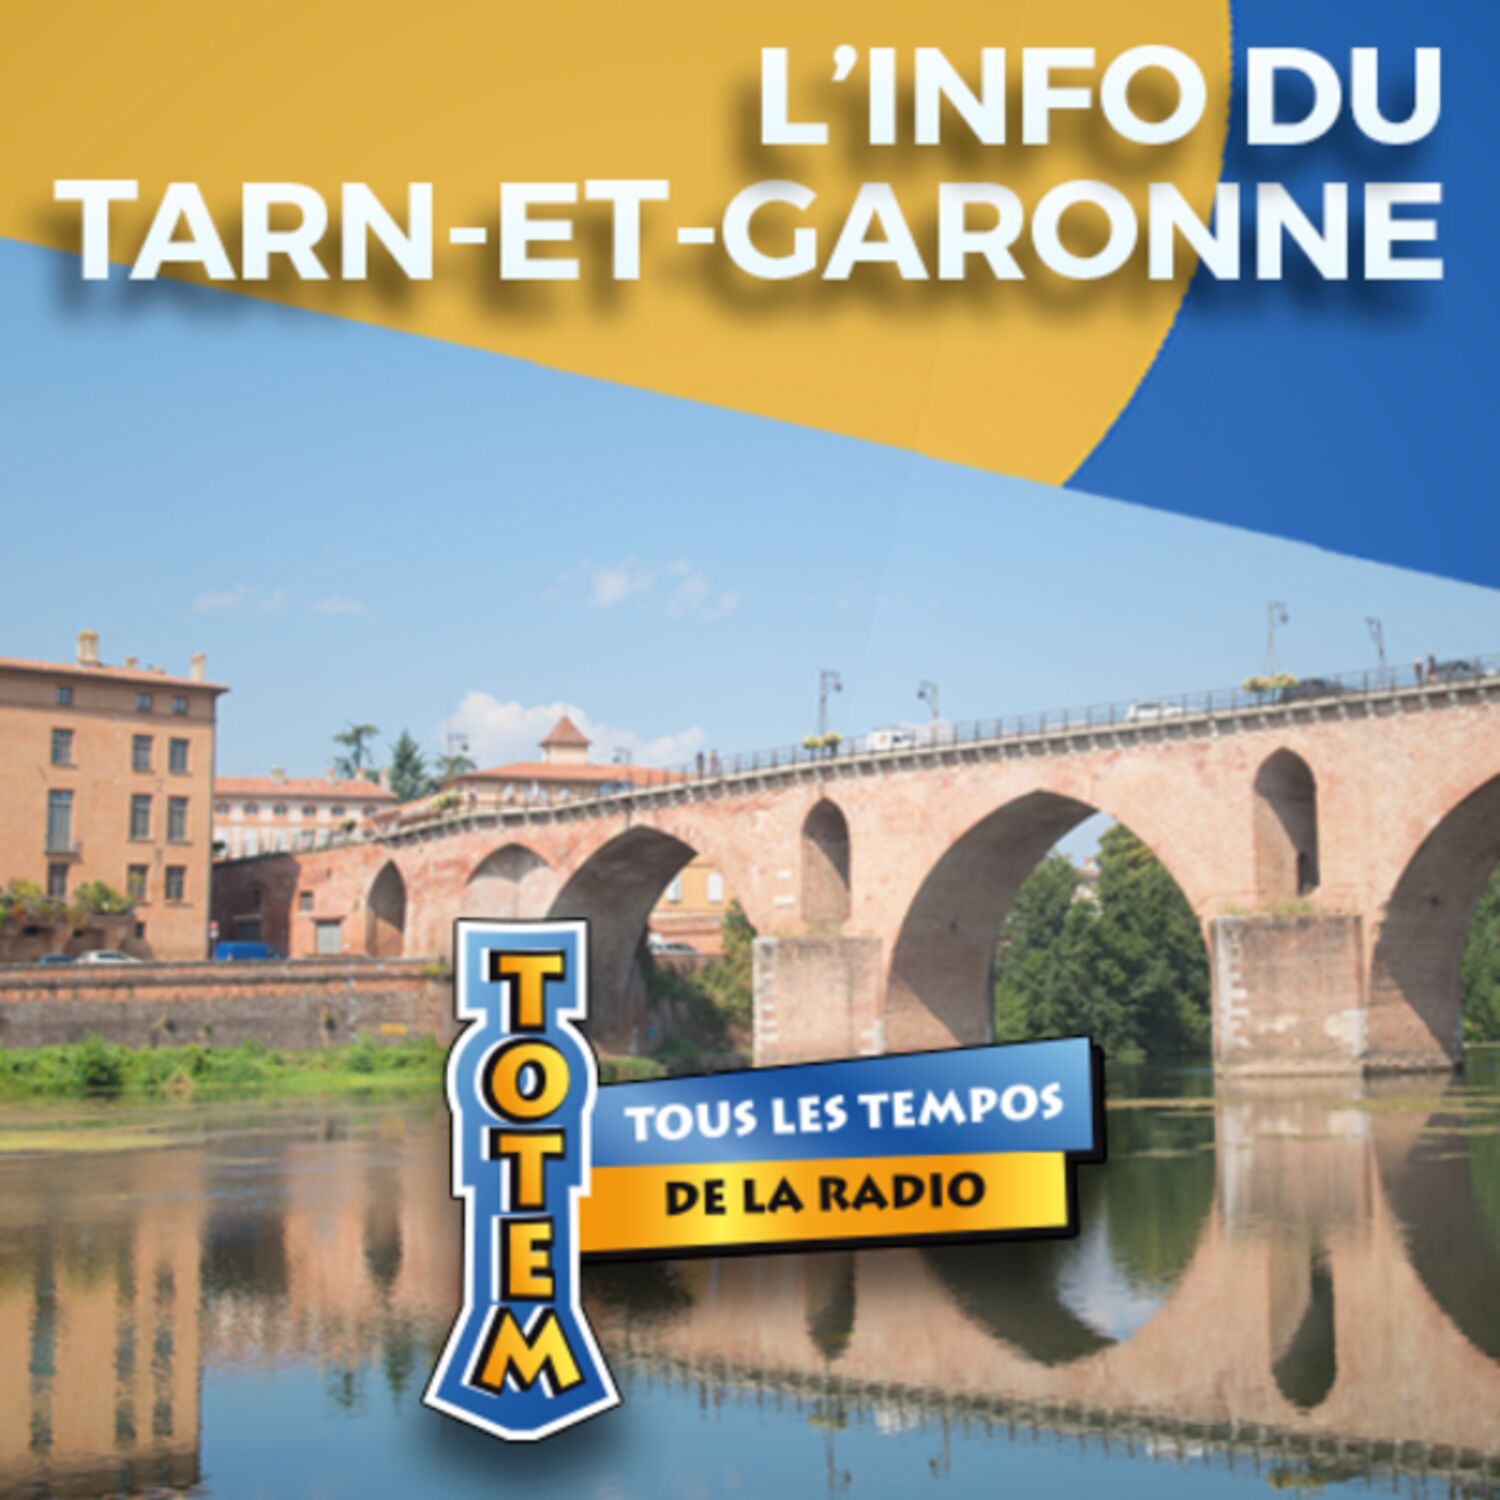 L'info du Tarn-et-Garonne du 21/04/23 à 06h28